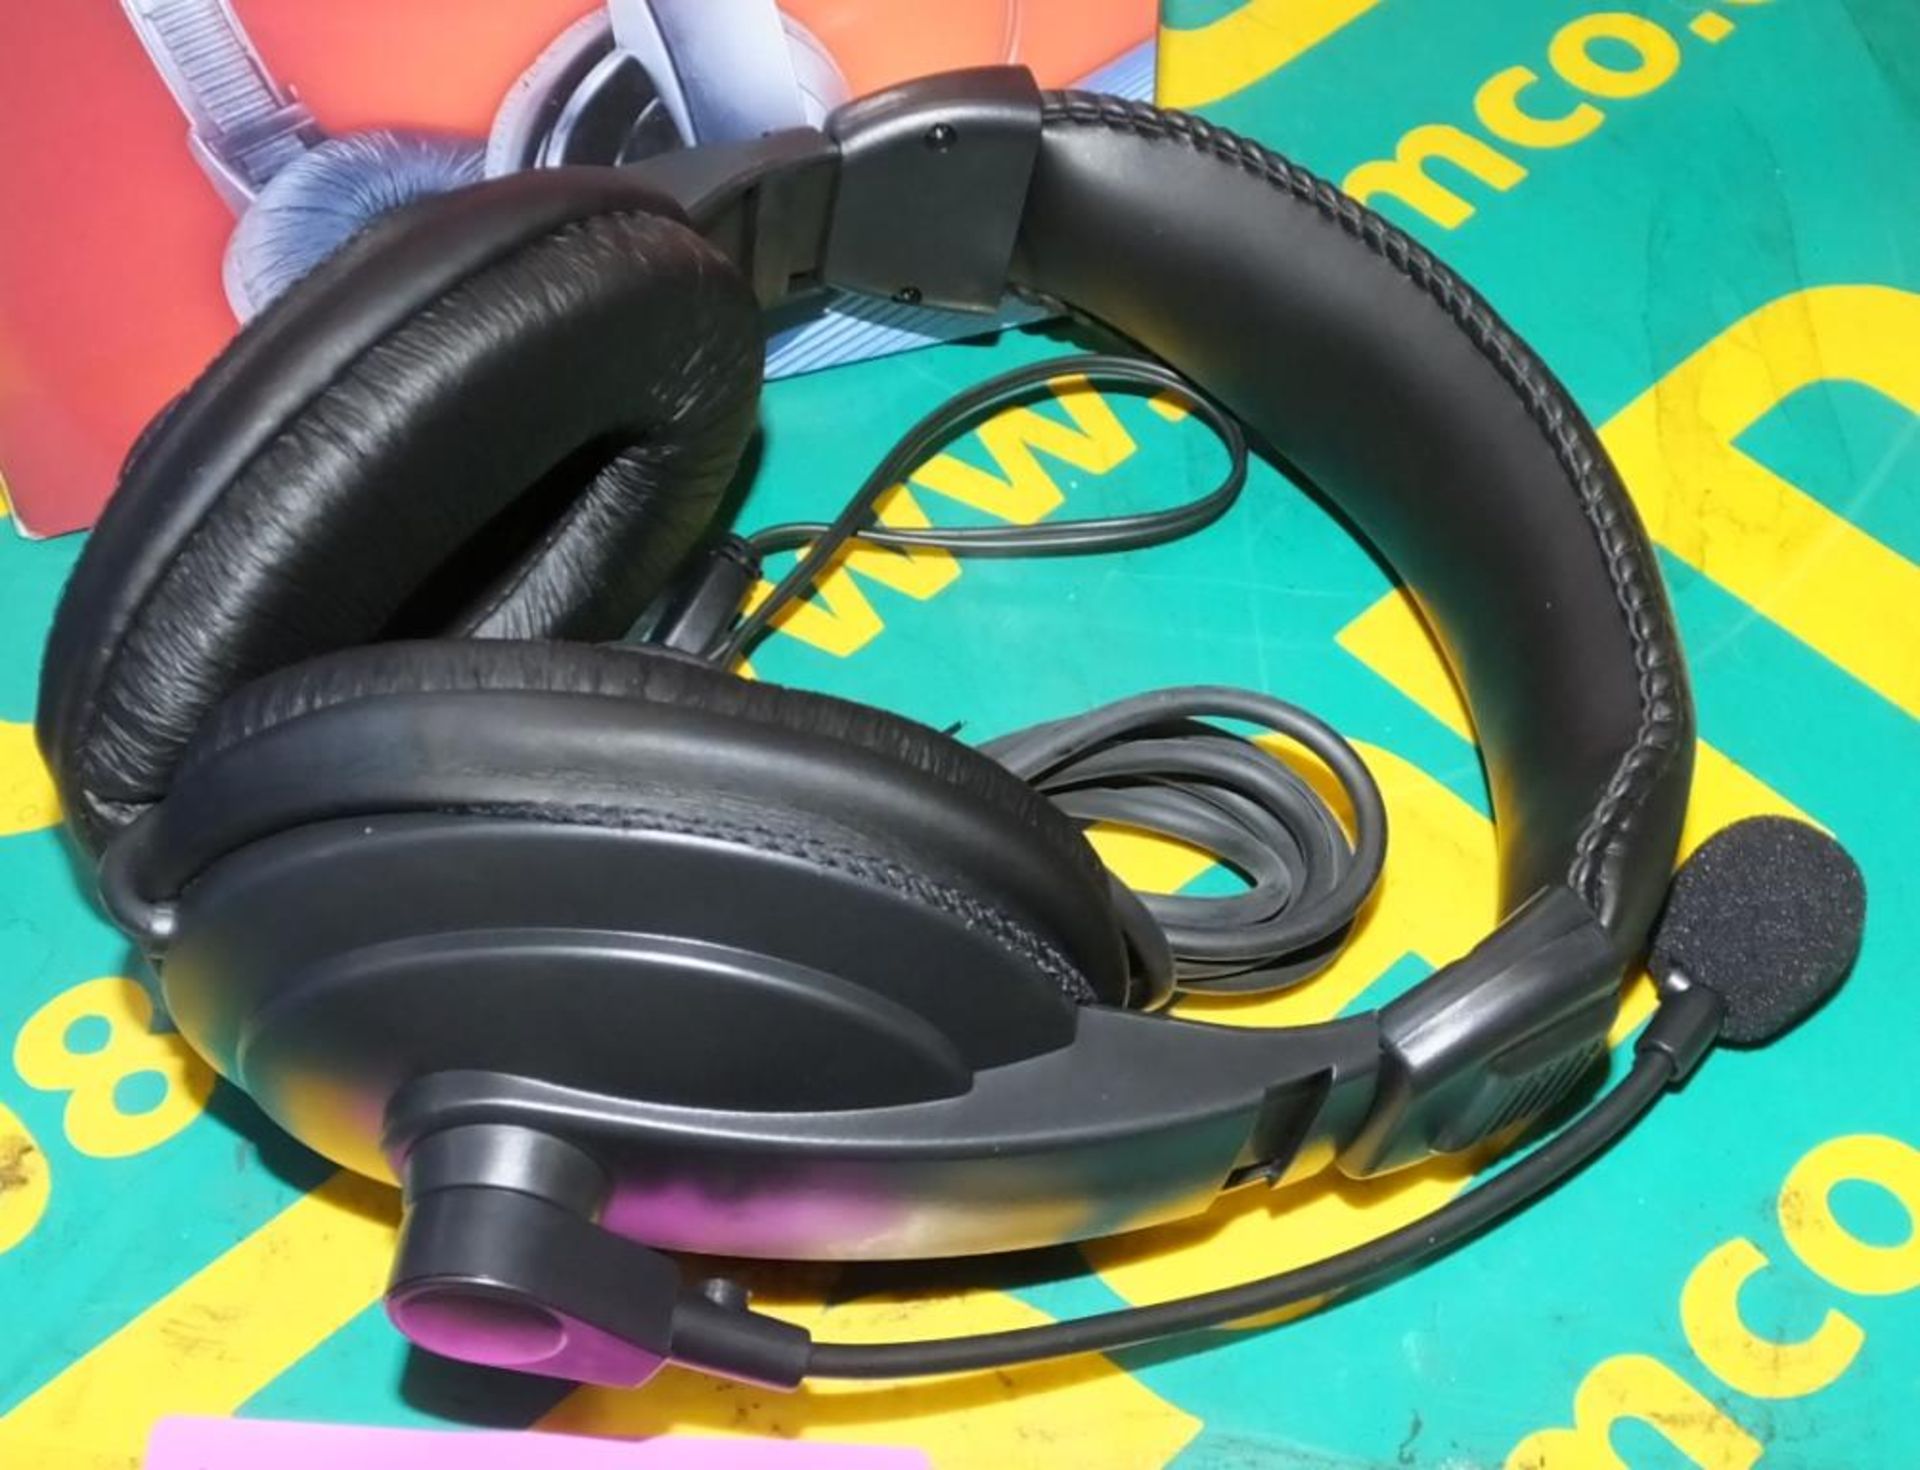 2x HS-206 Dynamic Combo Headphones - Image 2 of 2